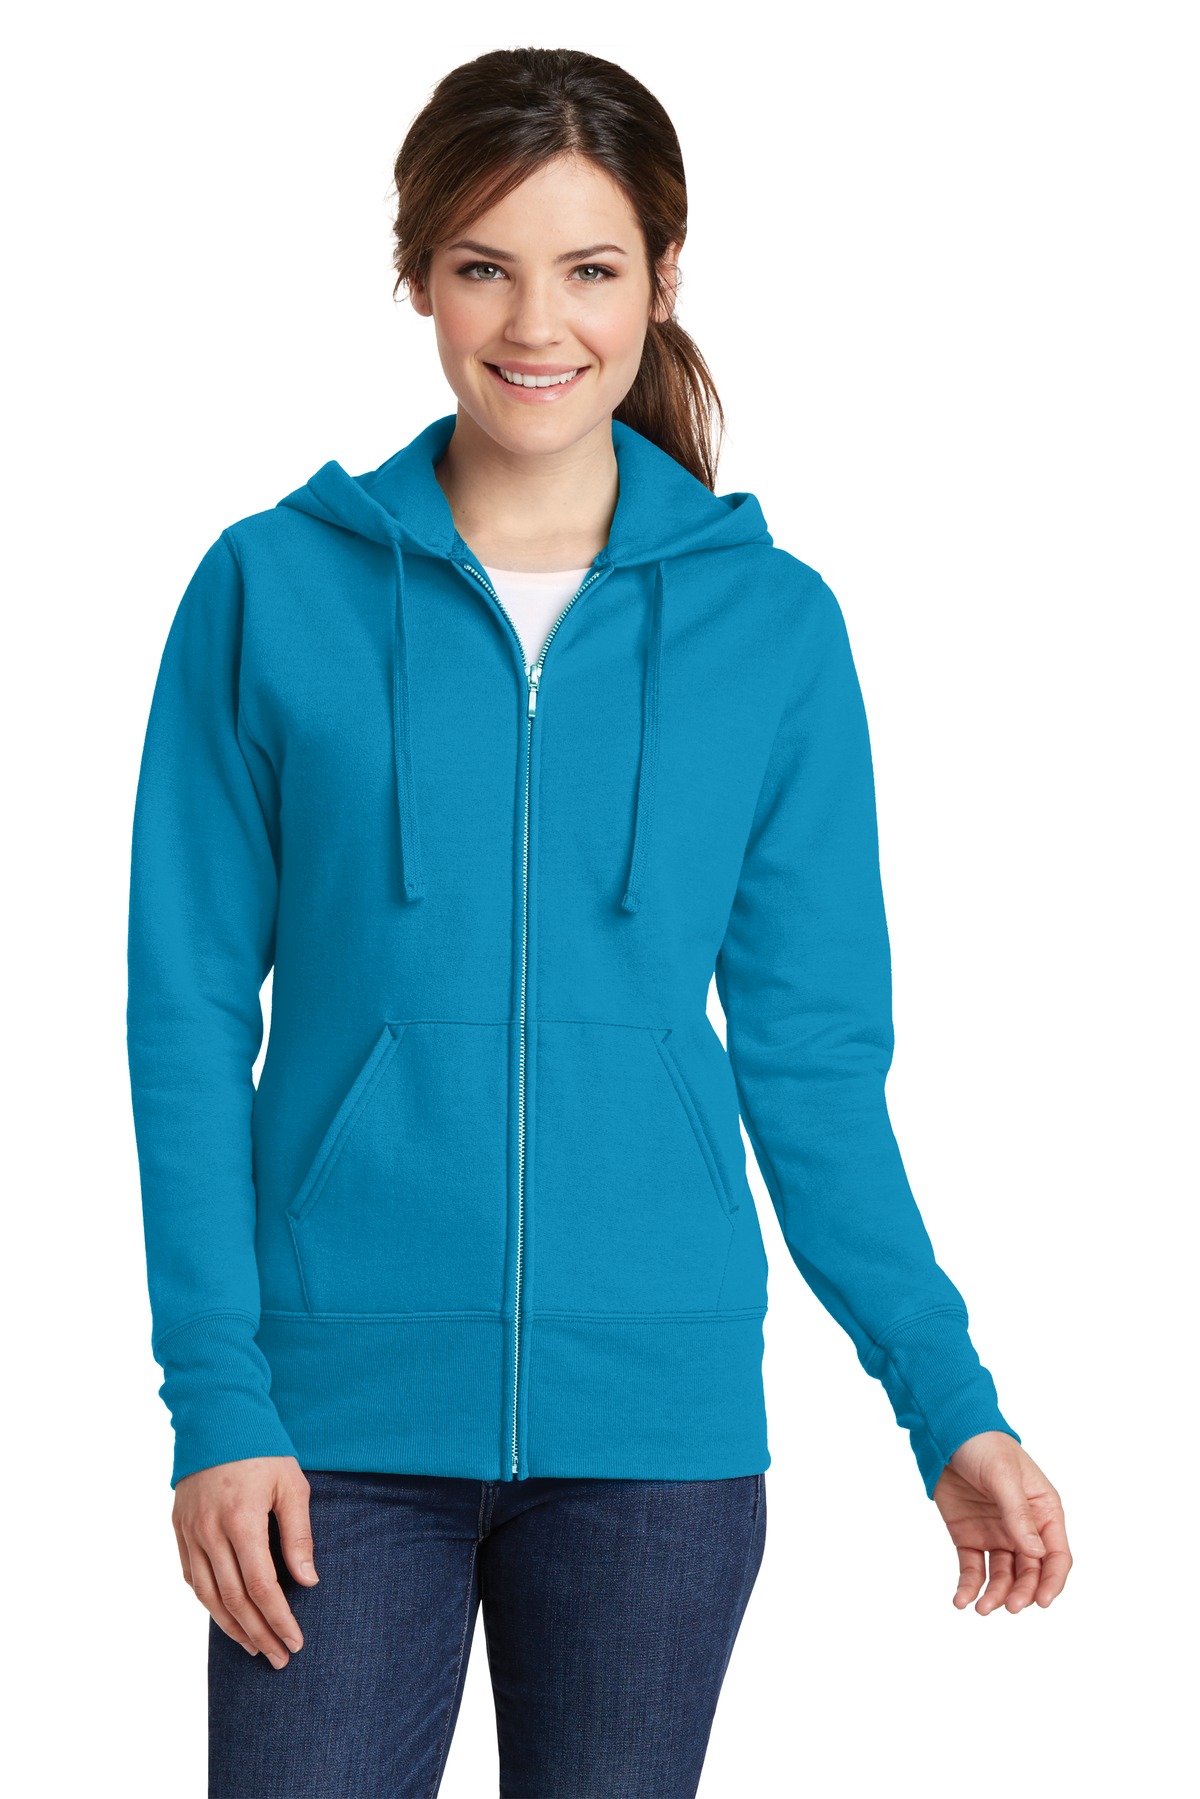 Port & Company Ladies Core Fleece Full Zip Hooded Sweatshirt-2XL (Neon Blue) - image 1 of 6